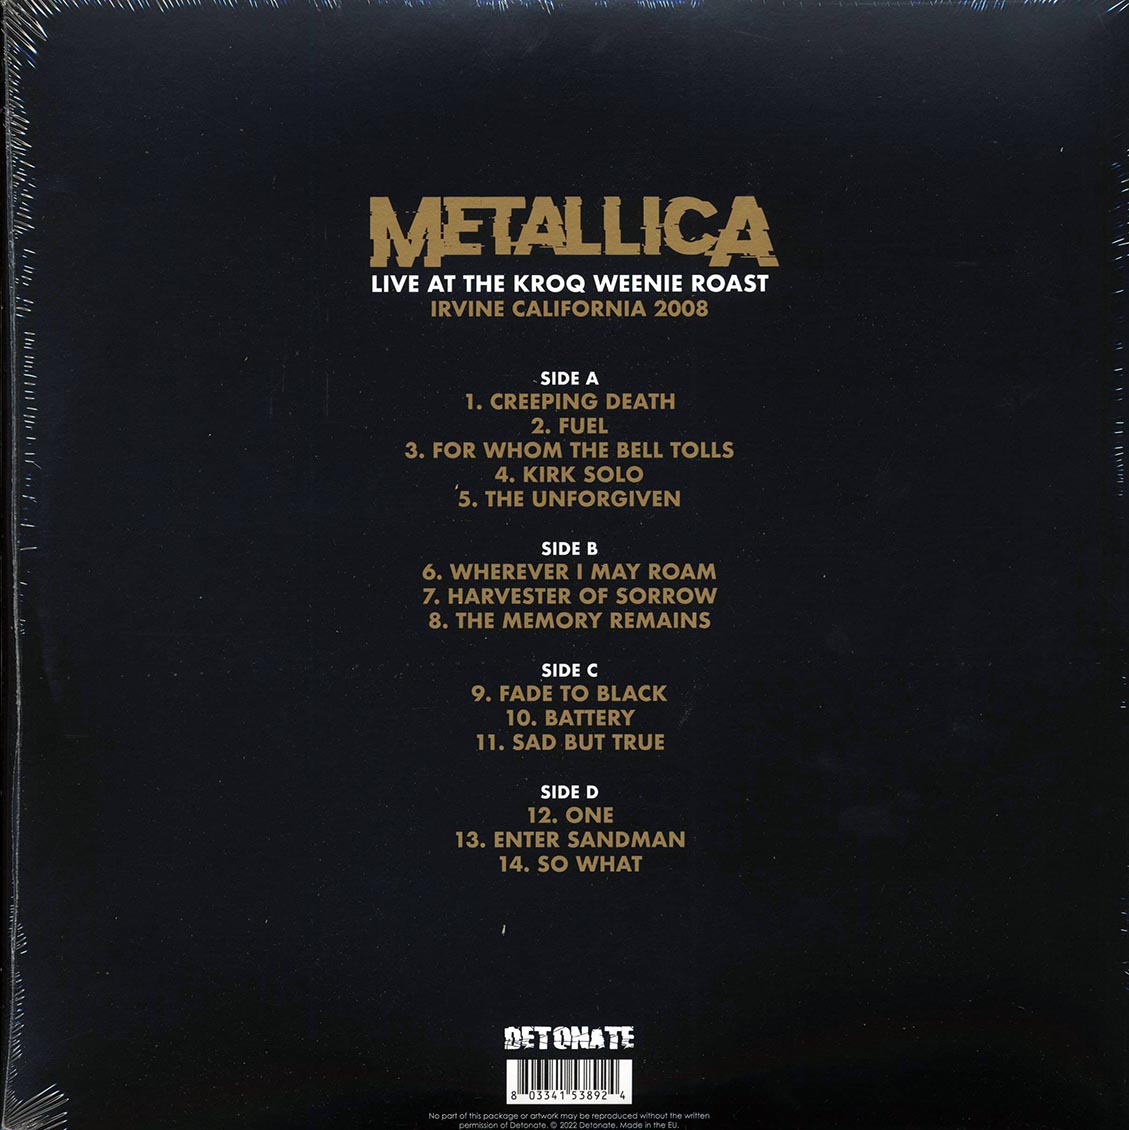 Metallica - Live At The KROQ Weenie Roast, Irvine, California 2008 (2xLP) (clear vinyl) - Vinyl LP, LP